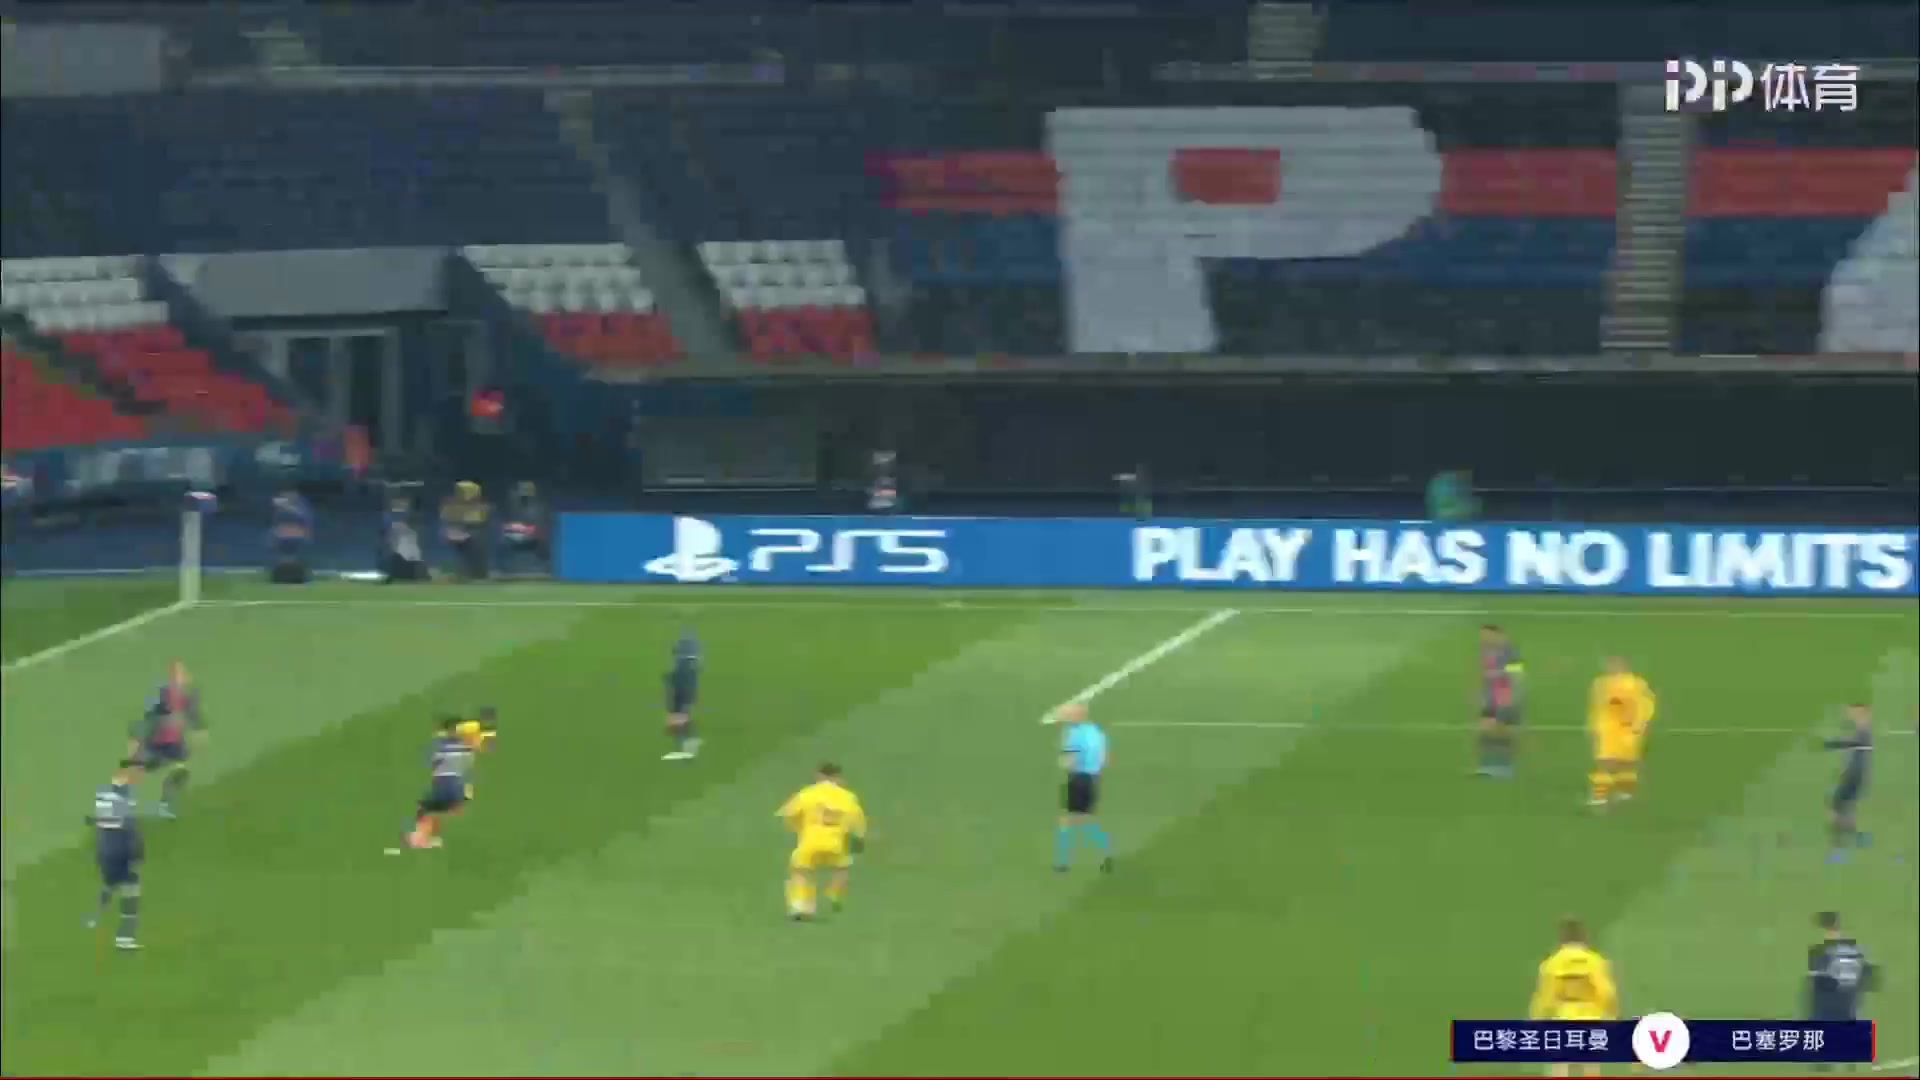 UEFA CL Paris Saint Germain (PSG) Vs FC Barcelona Lionel Andres Messi Goal in 36 min, Score 1:1